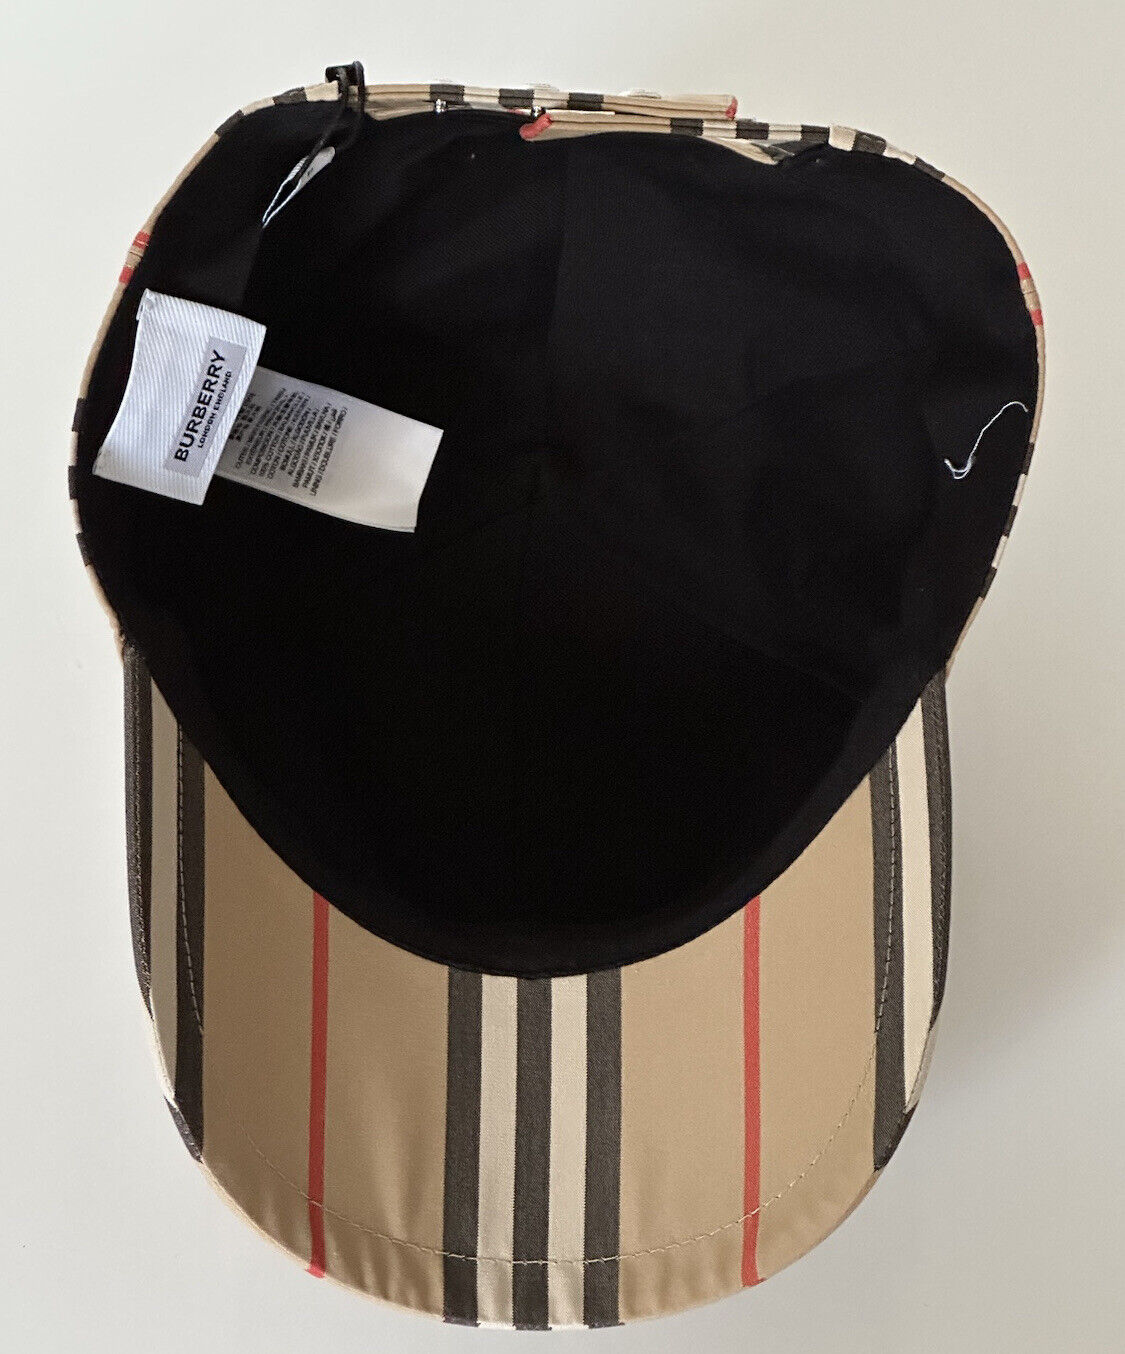 NWT $400 Бейсбольная кепка Burberry Stripe TB Archive Бежевая M (57 см) 8026924 Италия